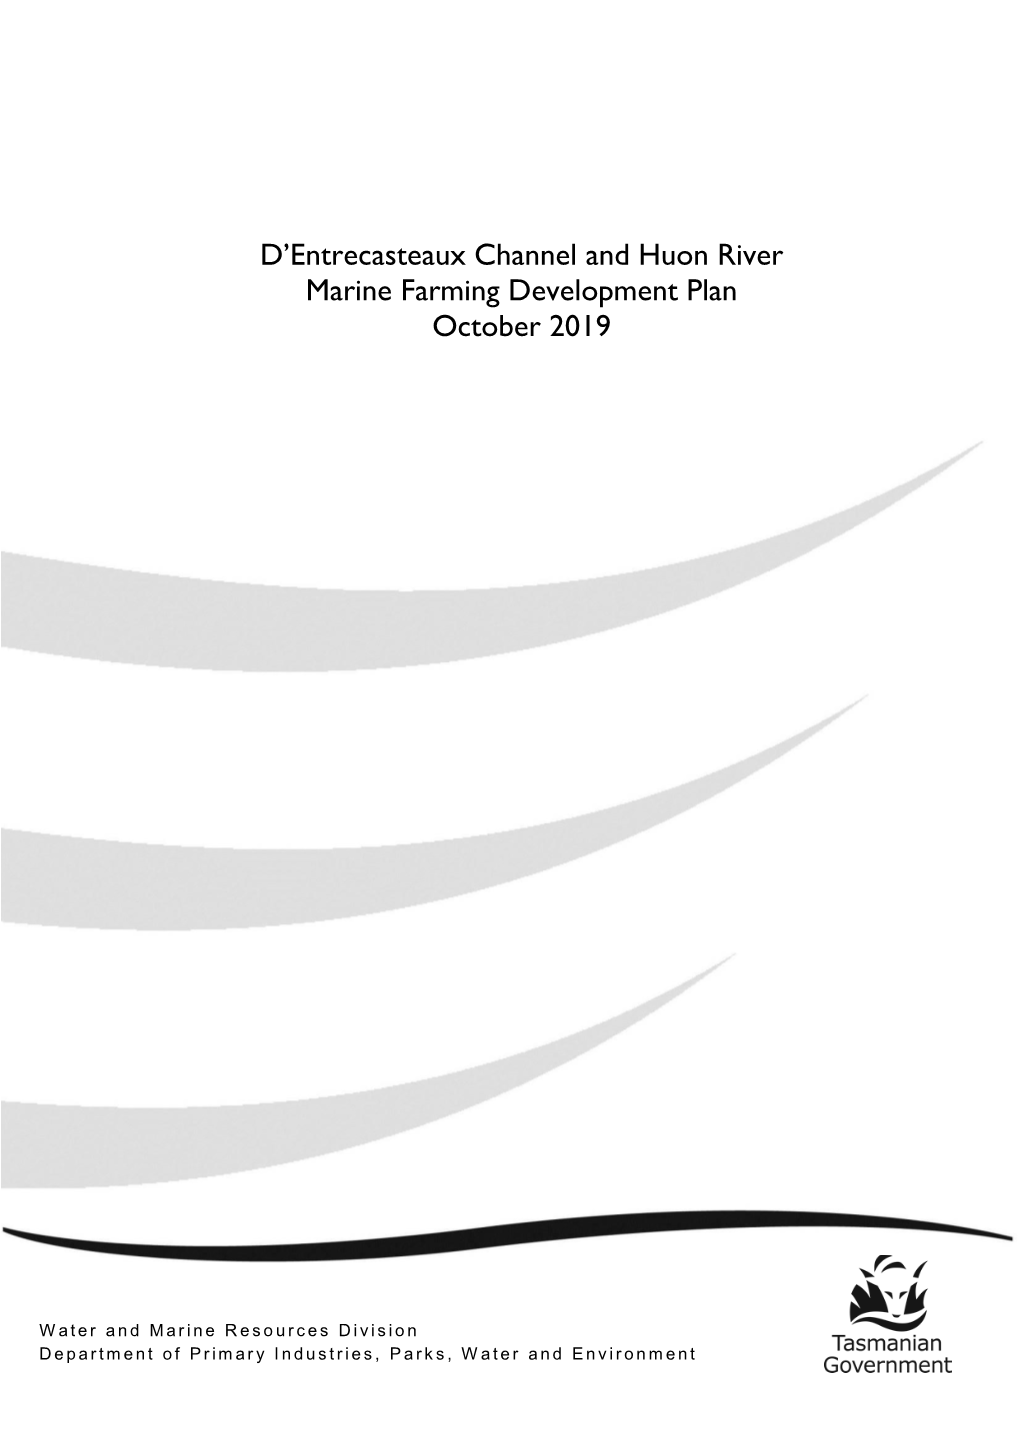 D'entrecasteaux Channel and Huon River Marine Farming Development Plan, October 2019